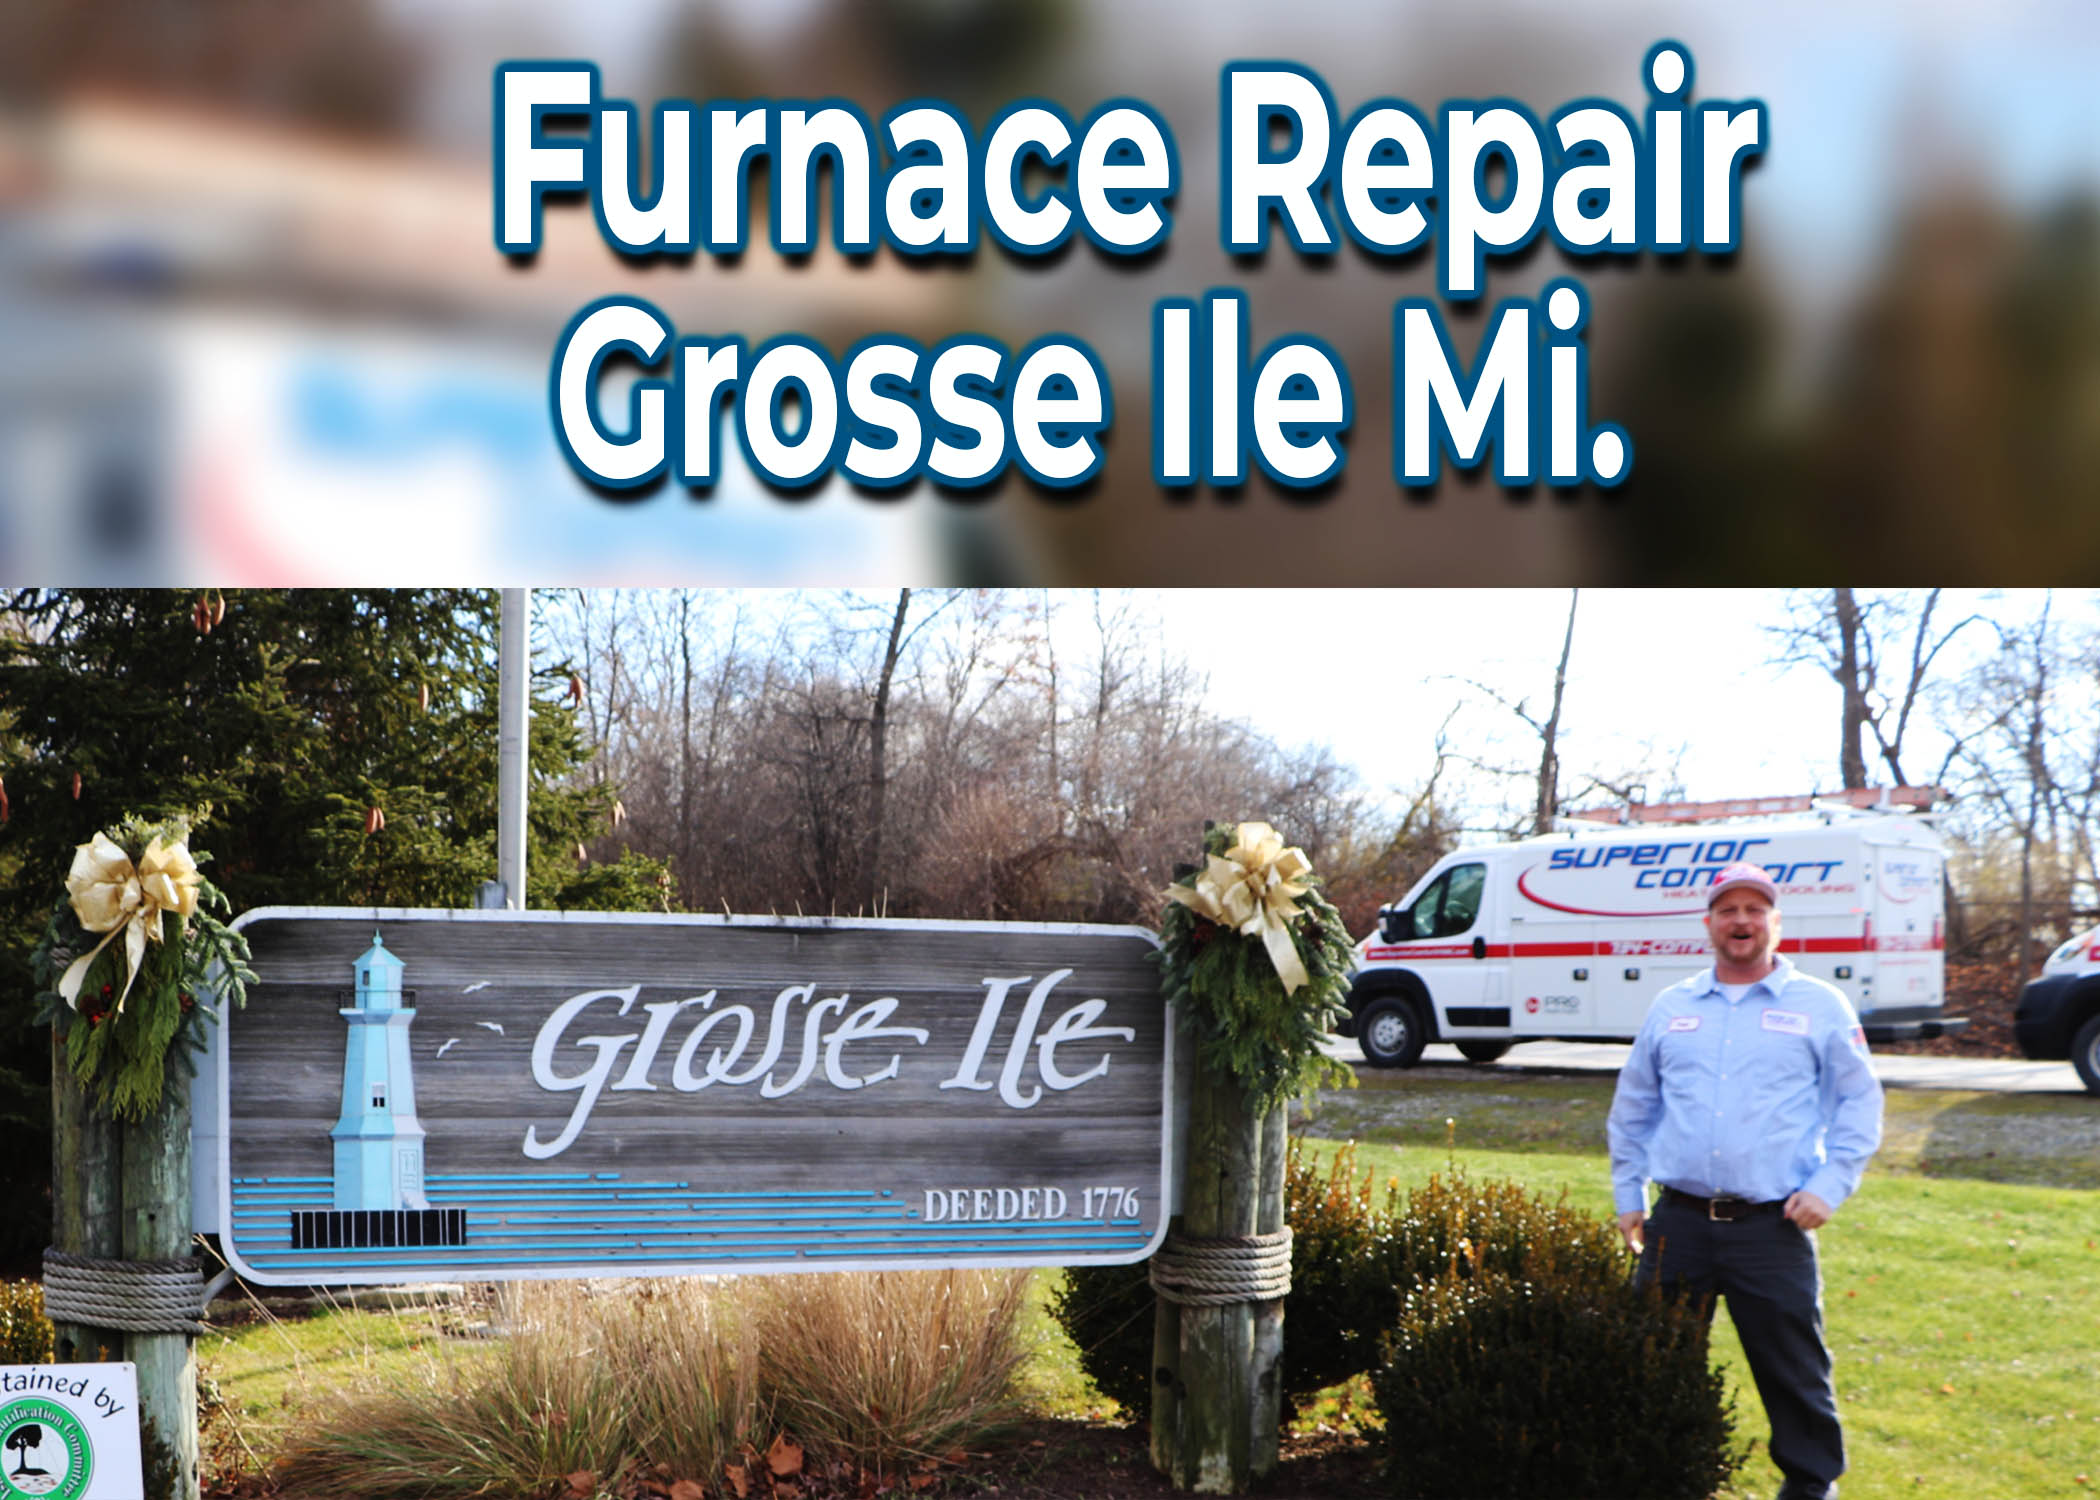 Furnace repair Grosse Ile Michigan- How Long Does It Take to Repair a Furnace